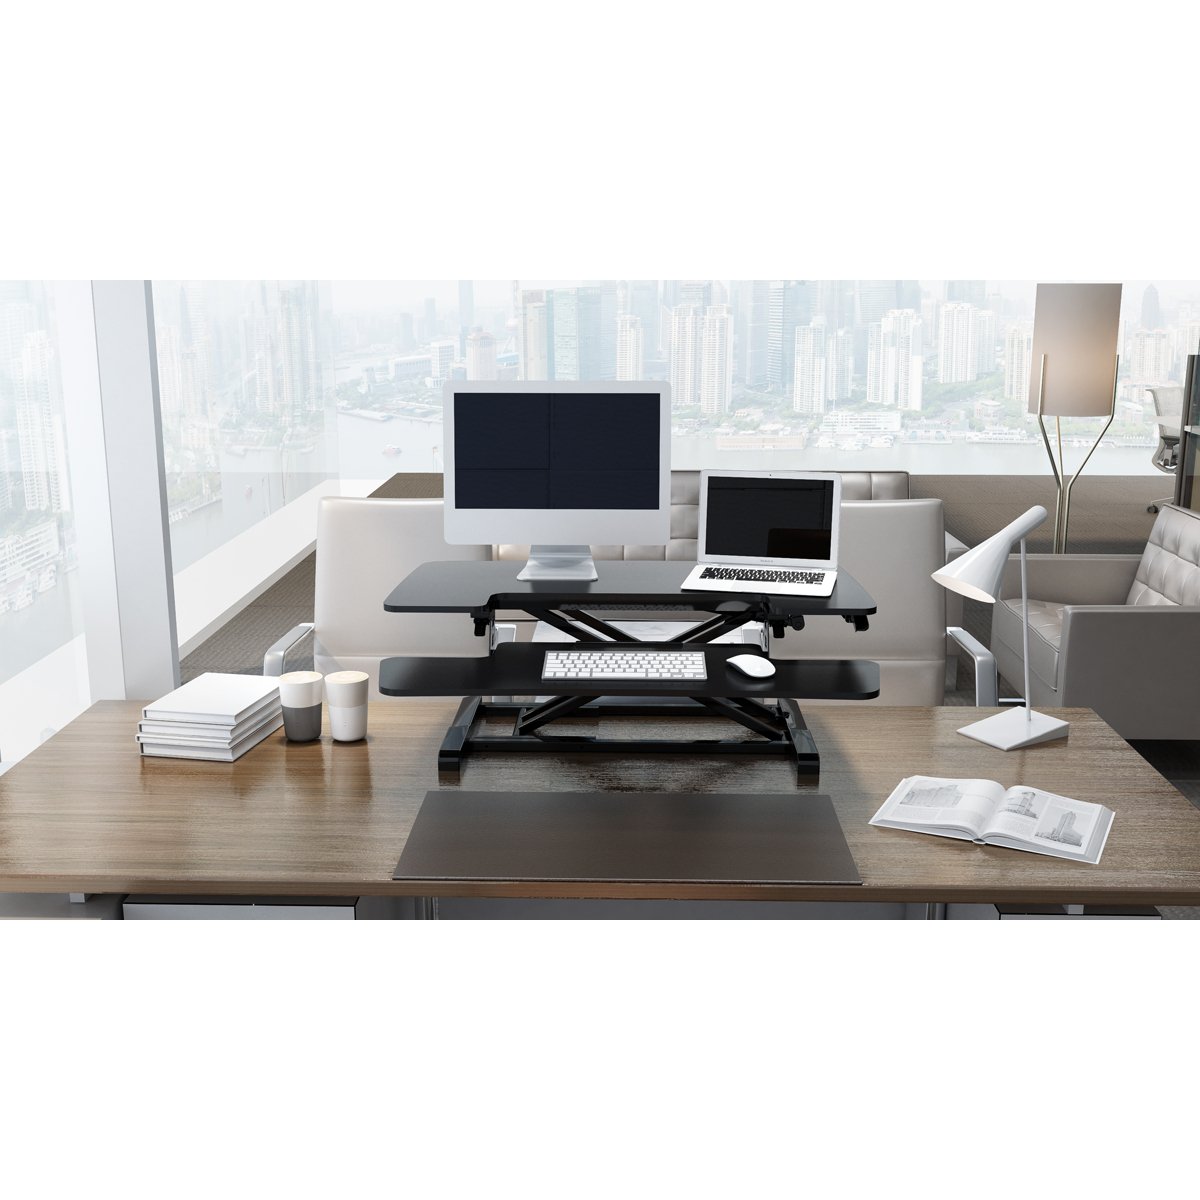 Dellonda DH15 89cm Height Adjustable Standing Desk Converter 50cm Max Height 15kg Capacity - McCormickTools